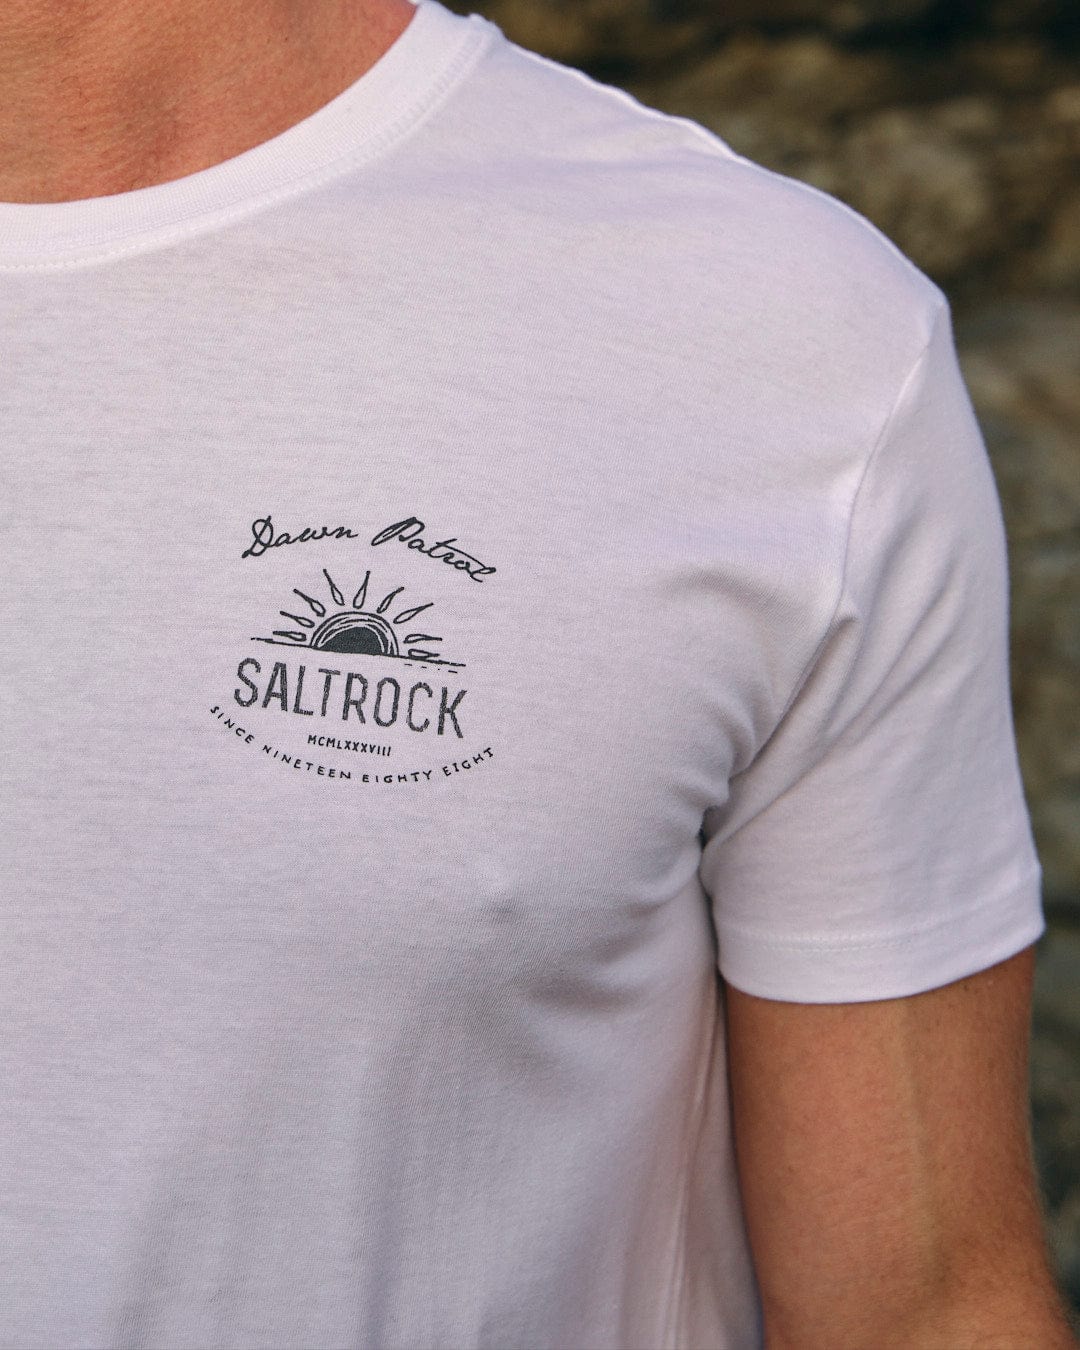 A man wearing a white t-shirt that says Saltrock's Dawn Patrol - Mens Short Sleeve T-Shirt - White.